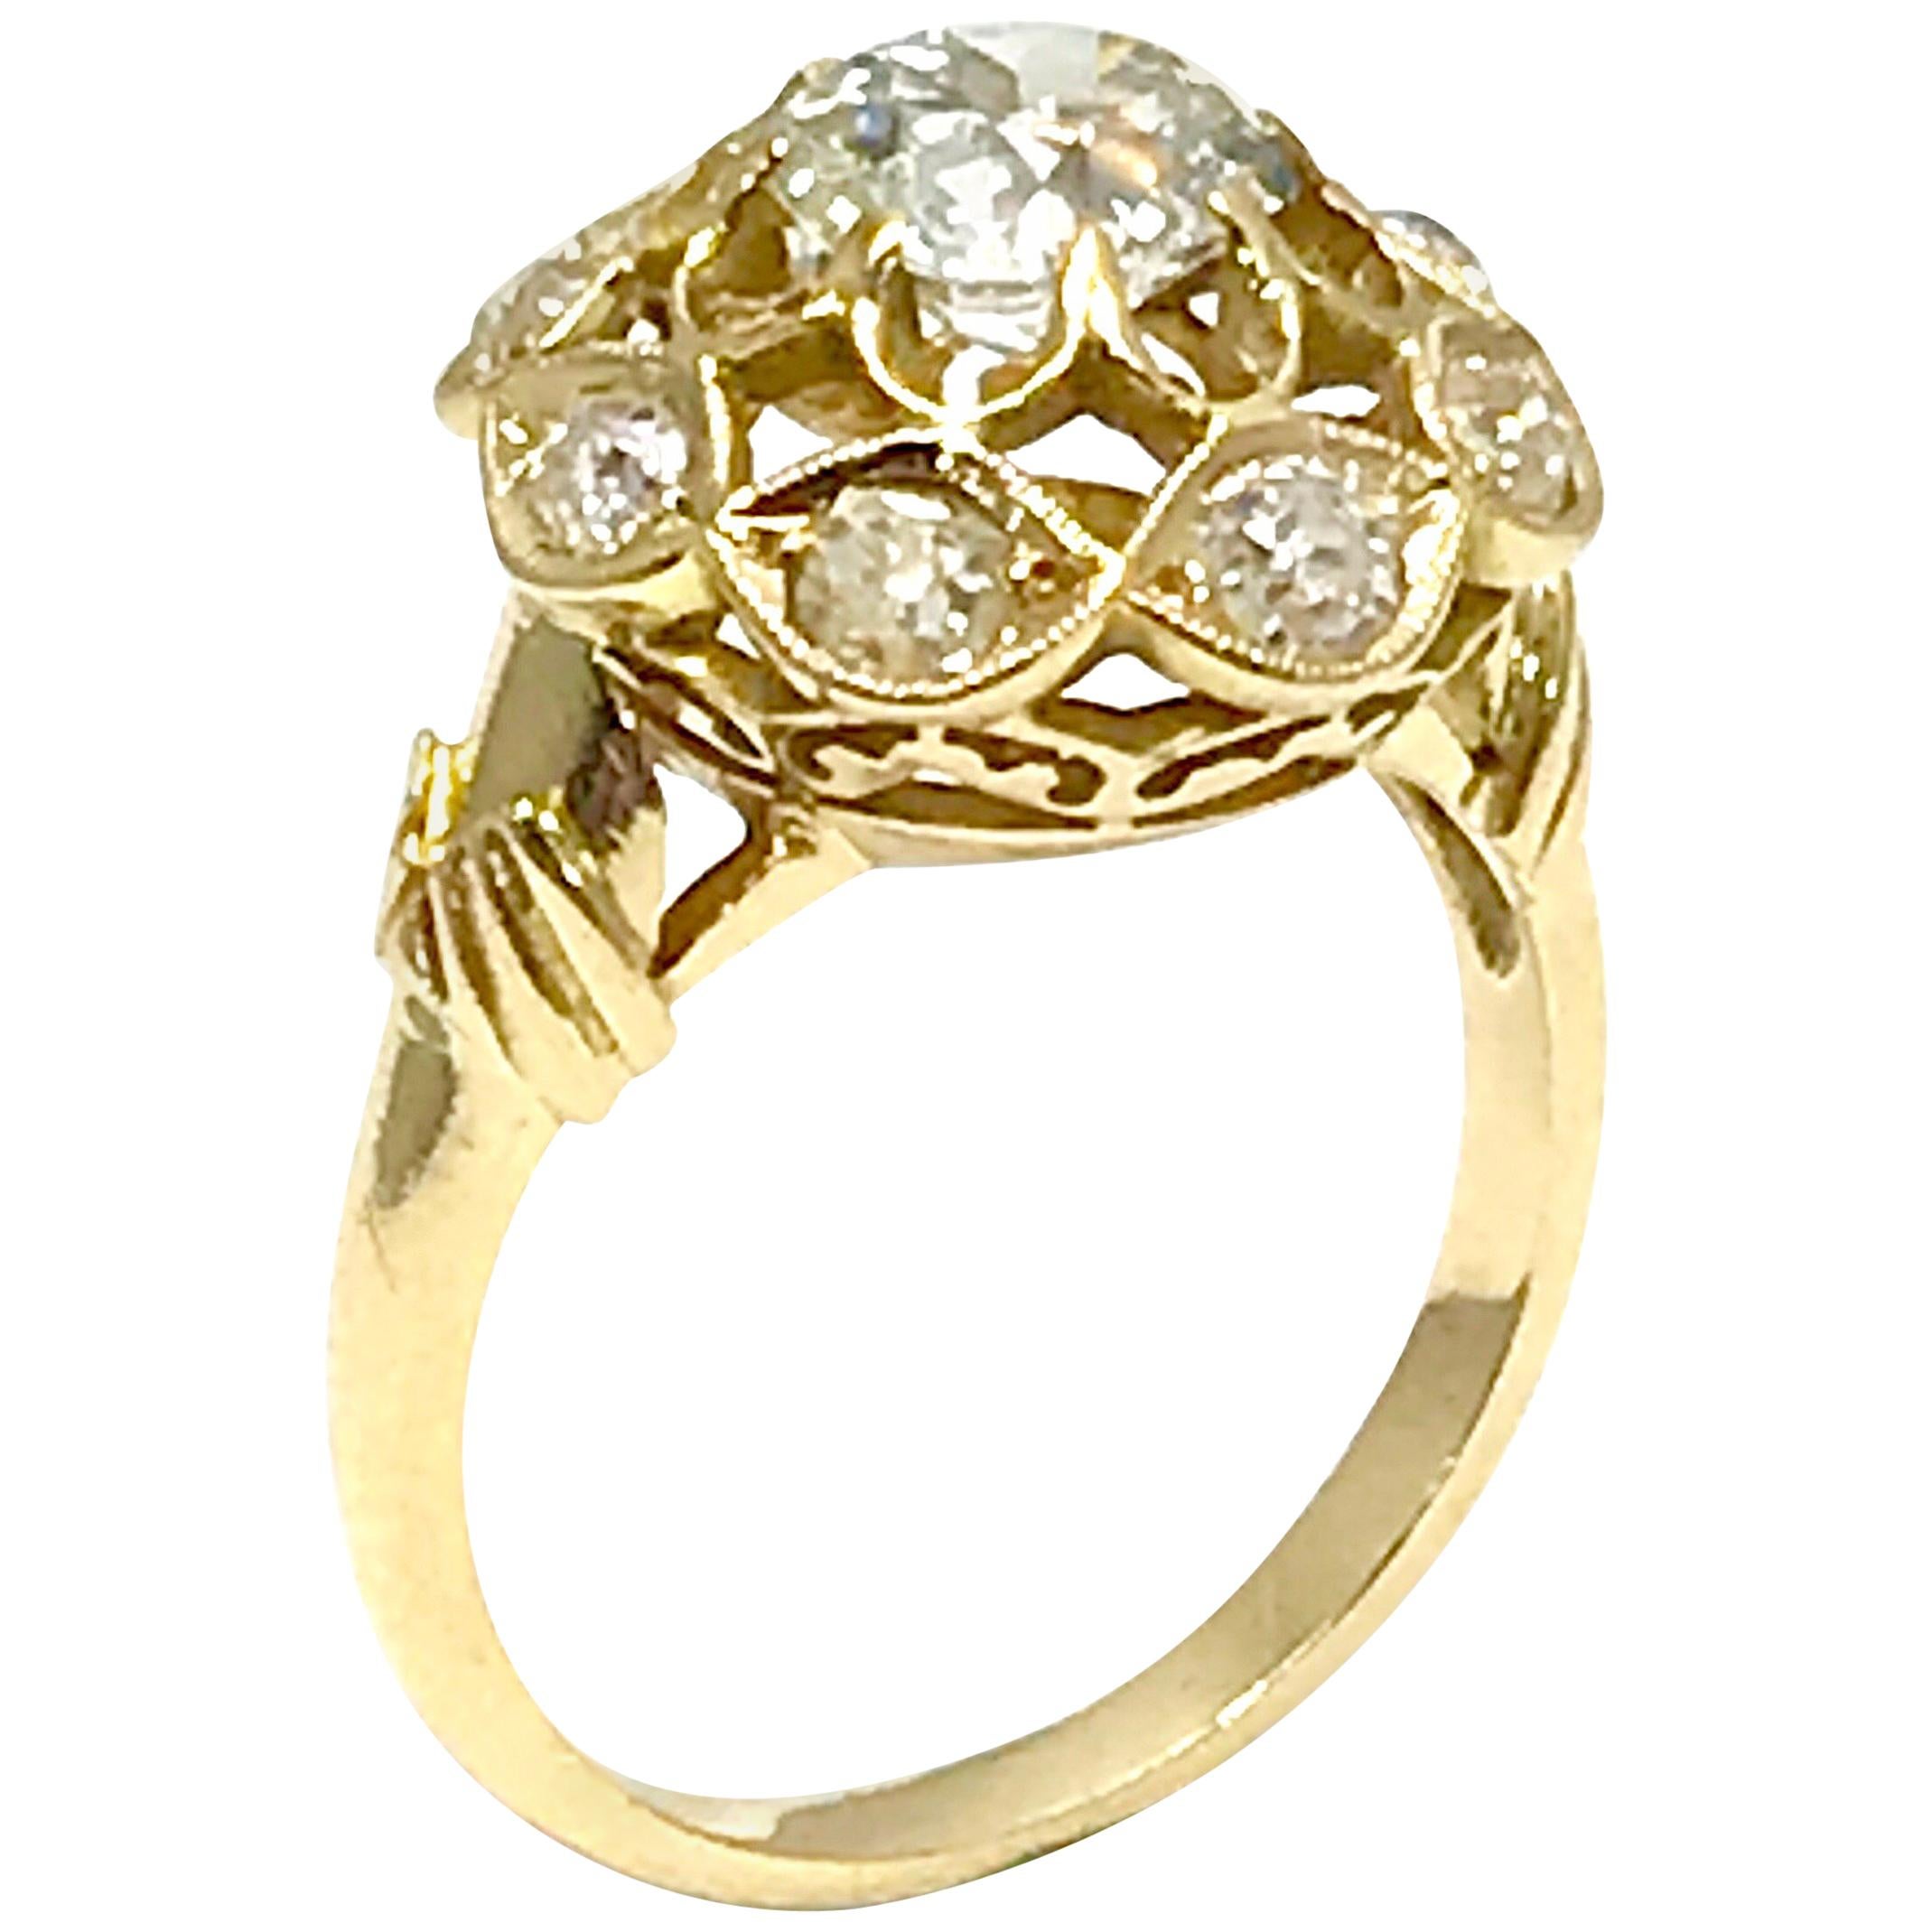 1.29 Carat Old Mine Cut Diamond and 18 Karat Gold Engagement or Fashion Ring